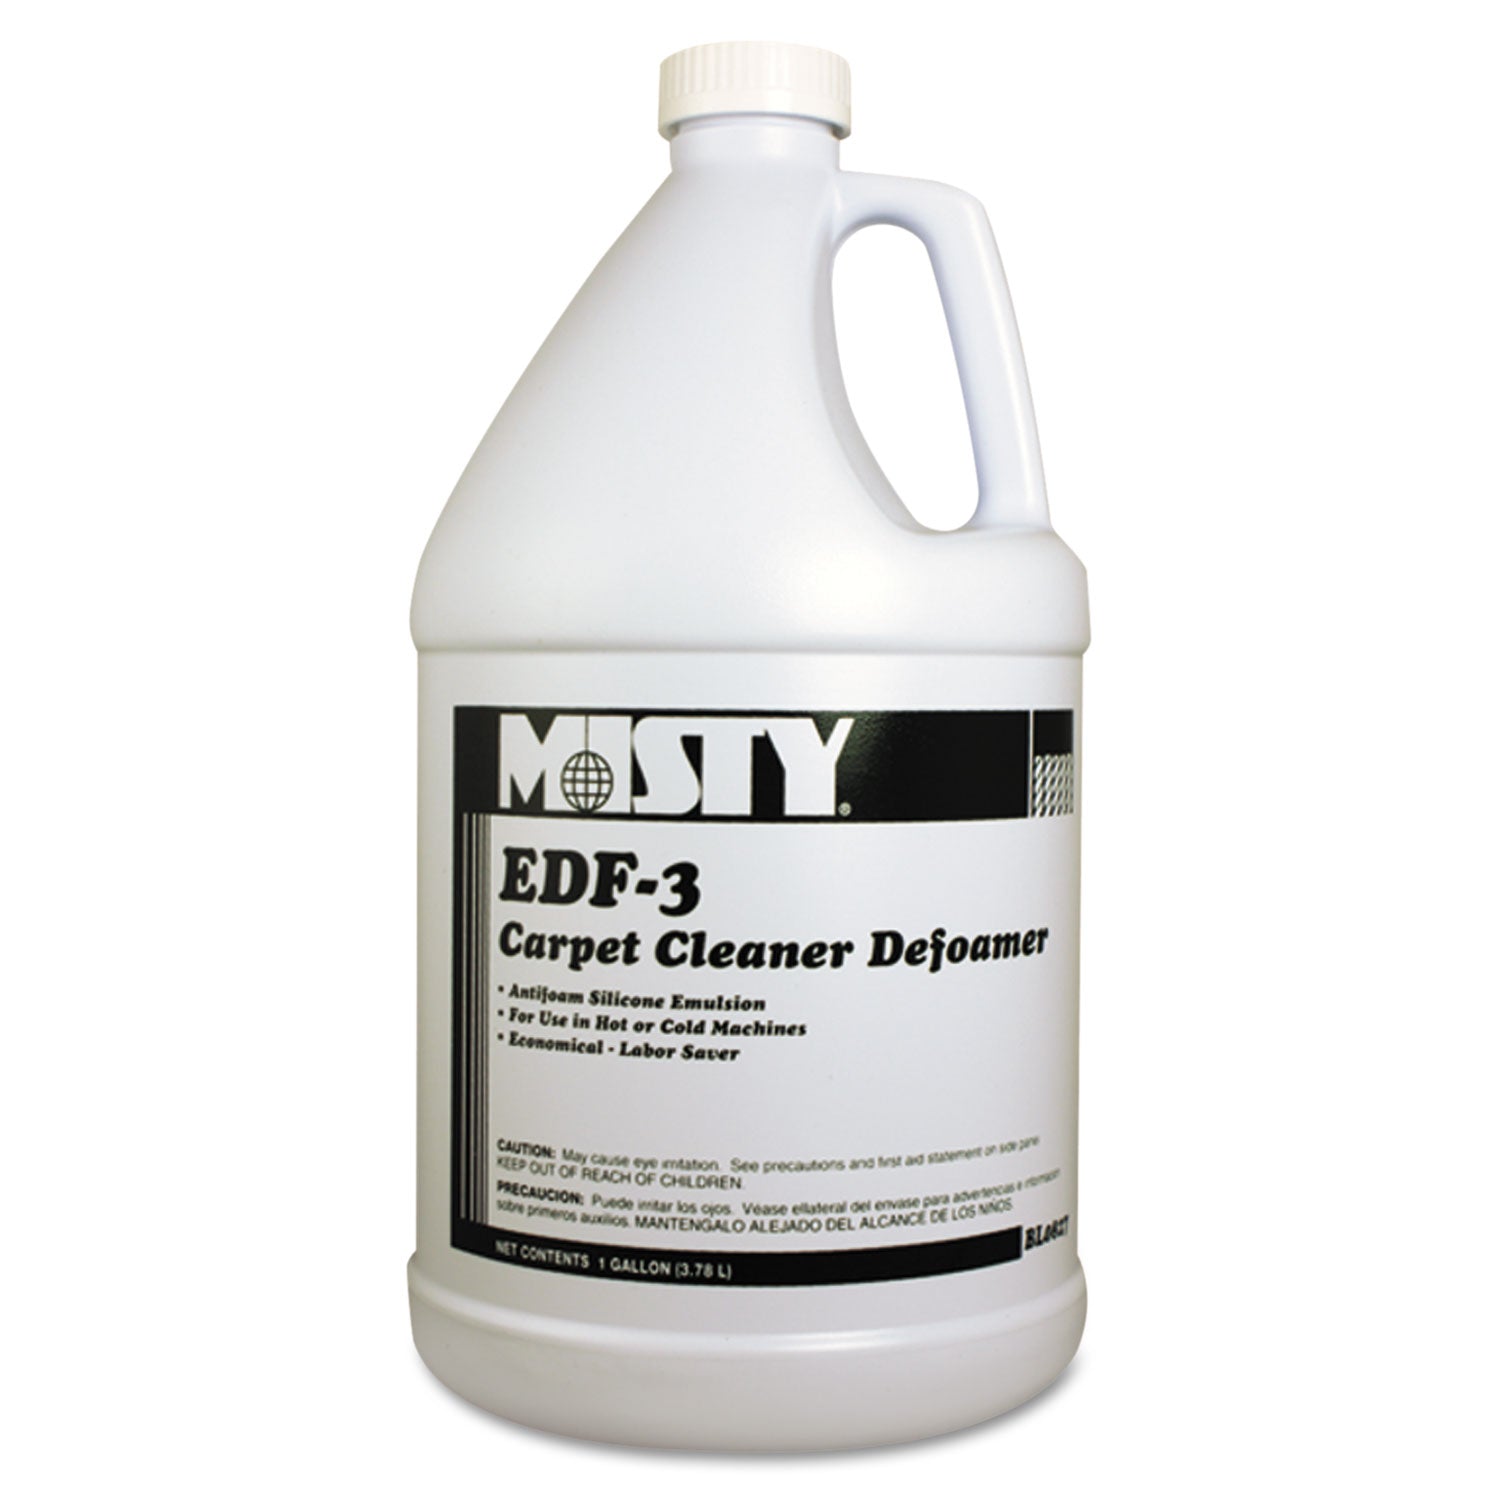 edf-3-carpet-cleaner-defoamer-1-gal-bottle-4-carton_amr1038773 - 1